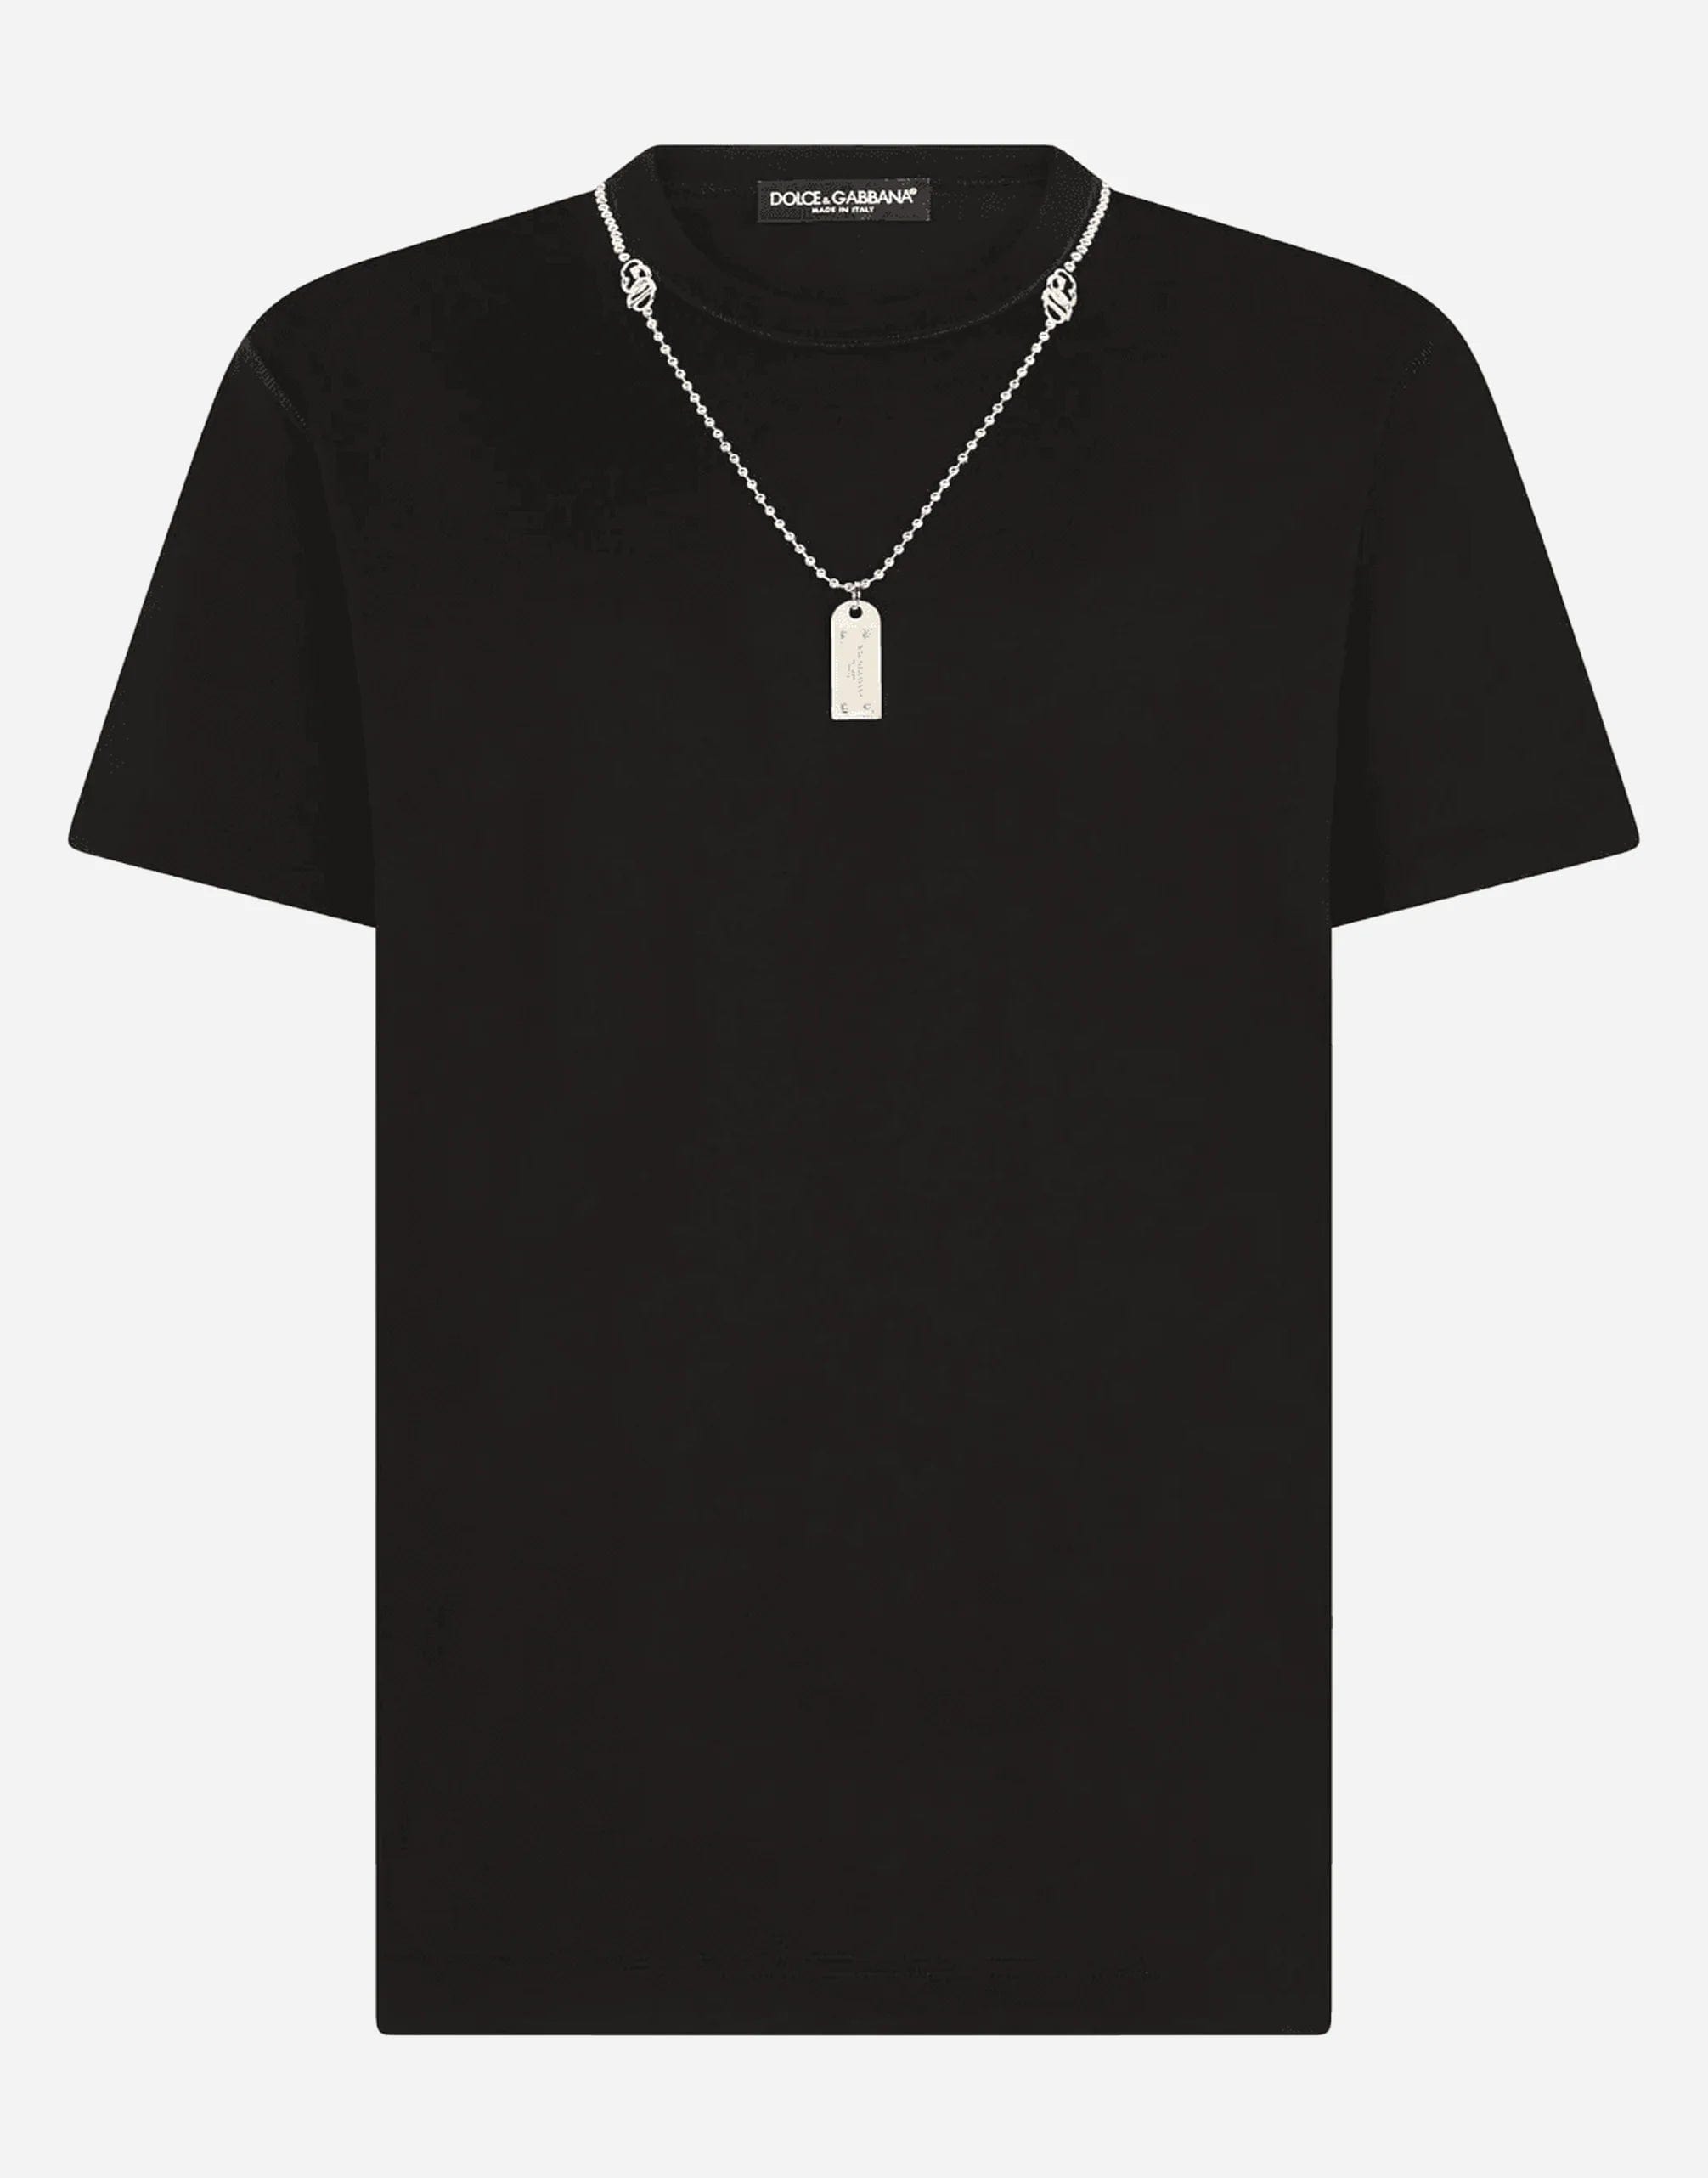 Dolce & Gabbana Logo Engraved Chain T-Shirt